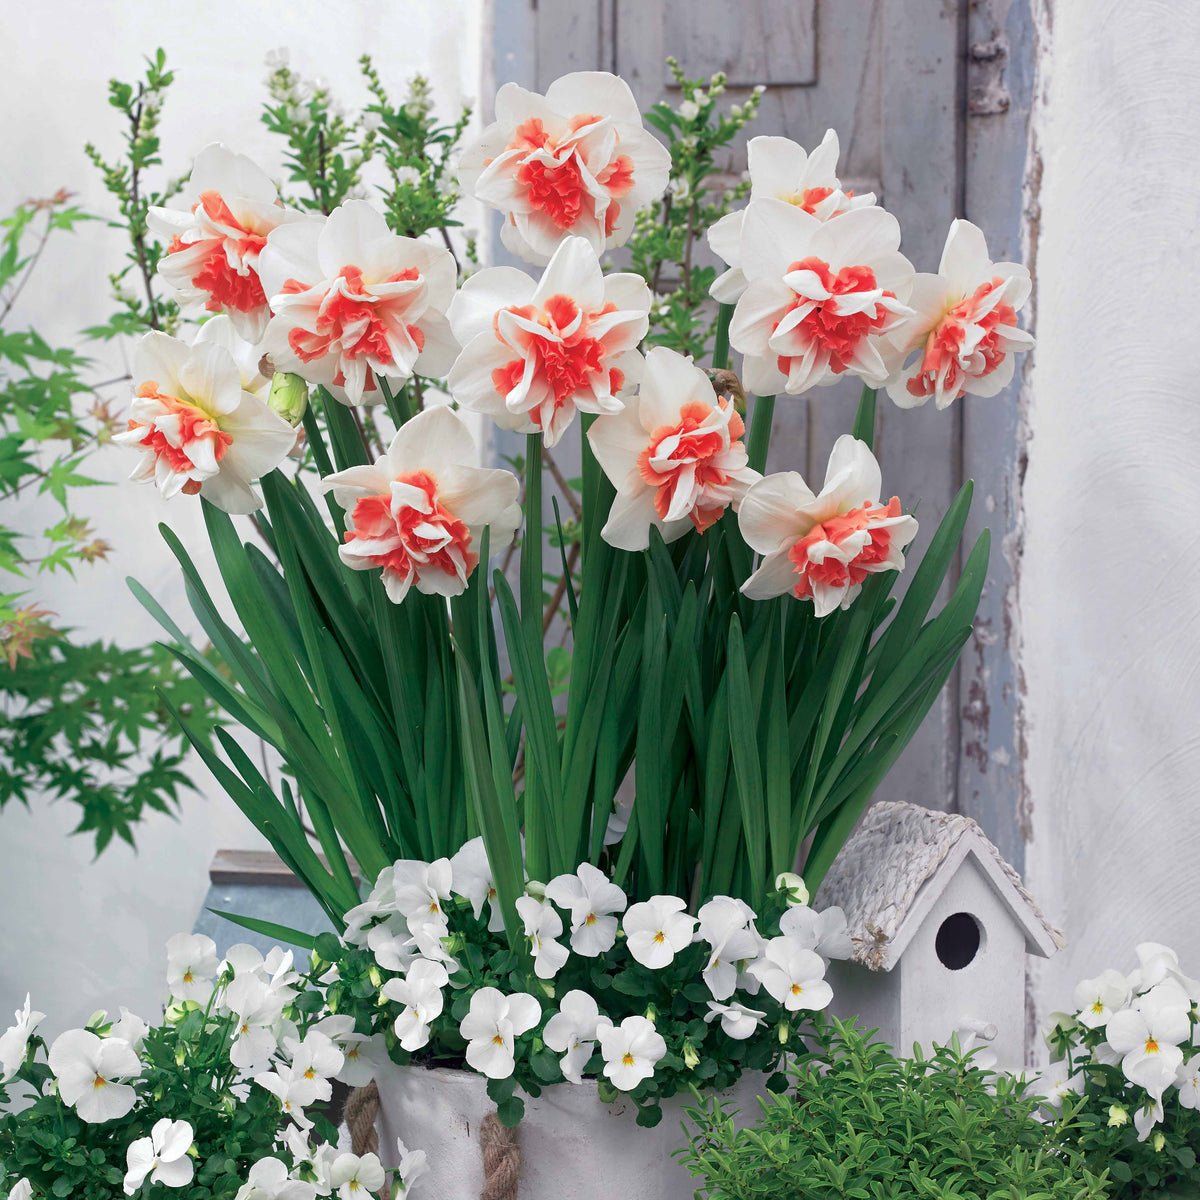 10 Narcisses à fleurs doubles doubles Delnashaugh - Narcissus delnashaugh - Plantes